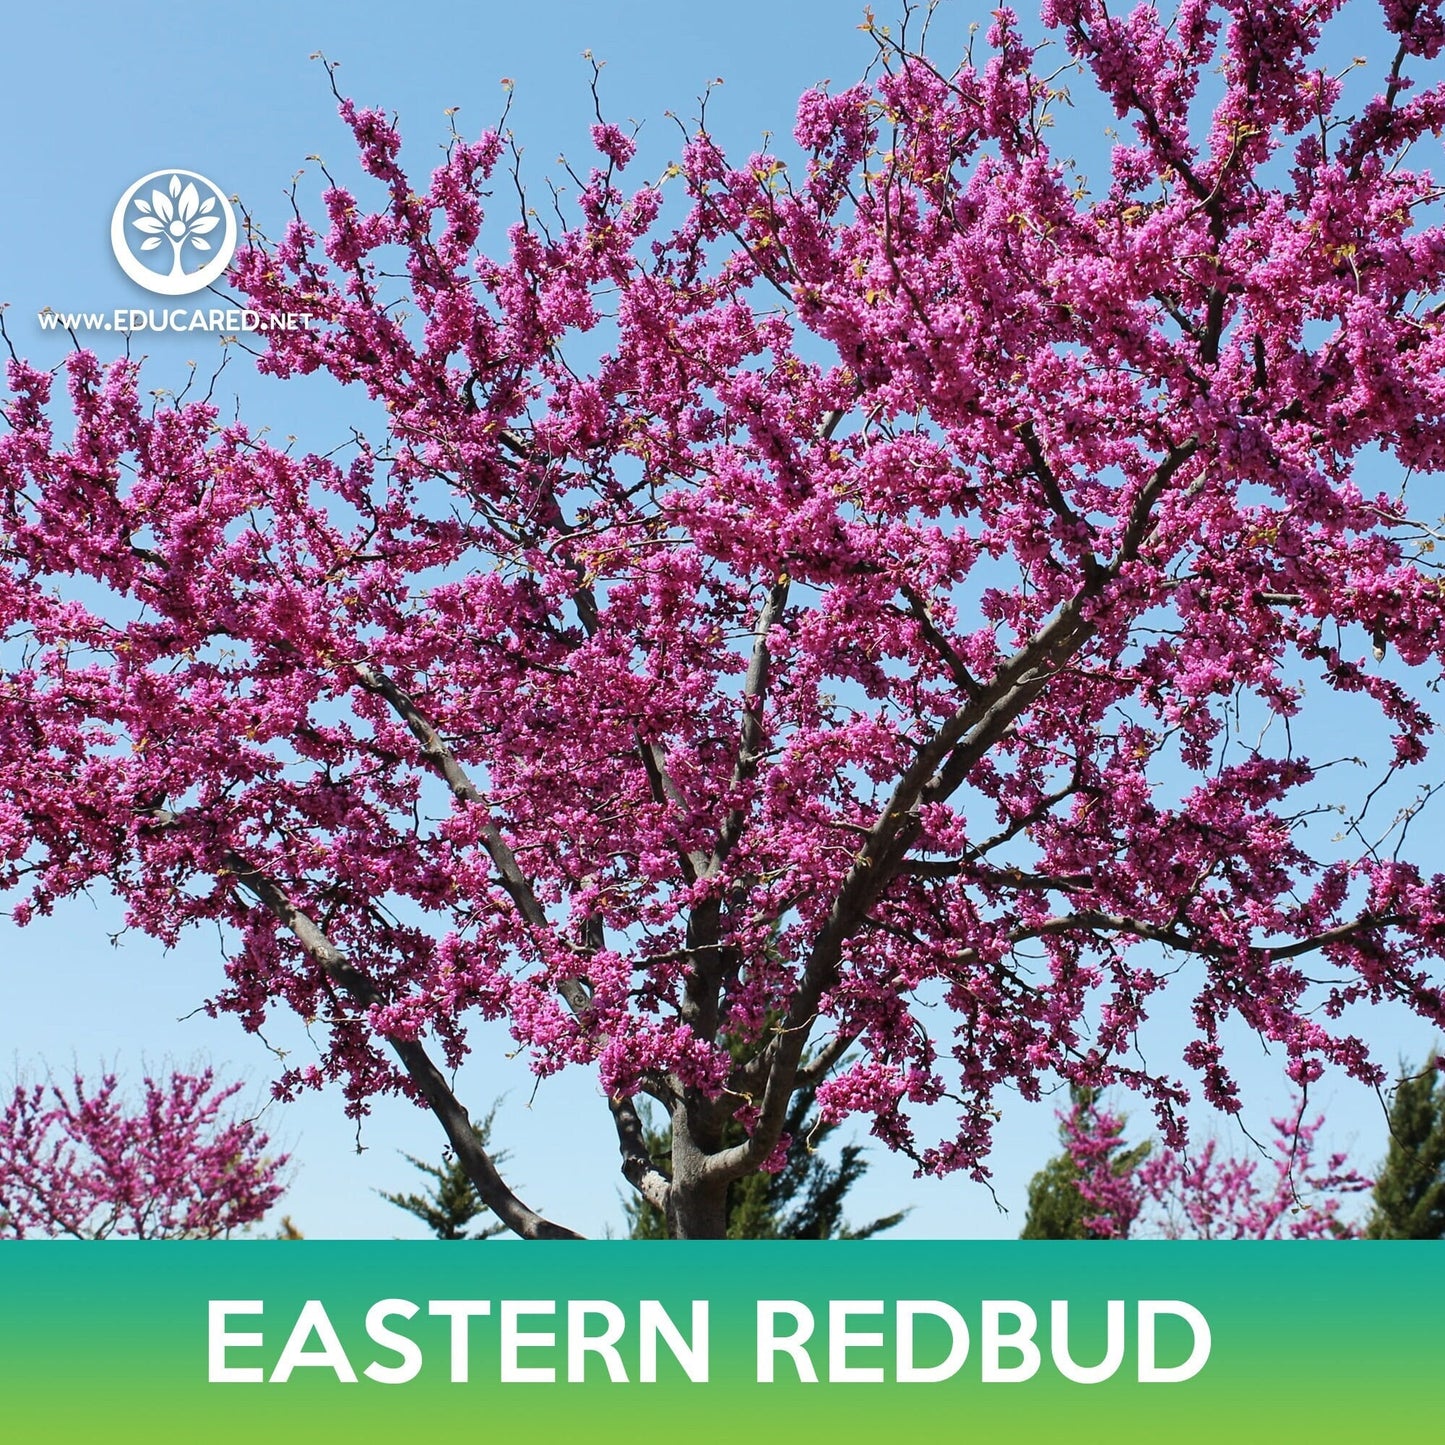 Eastern Redbud Seeds, Cercis canadensis